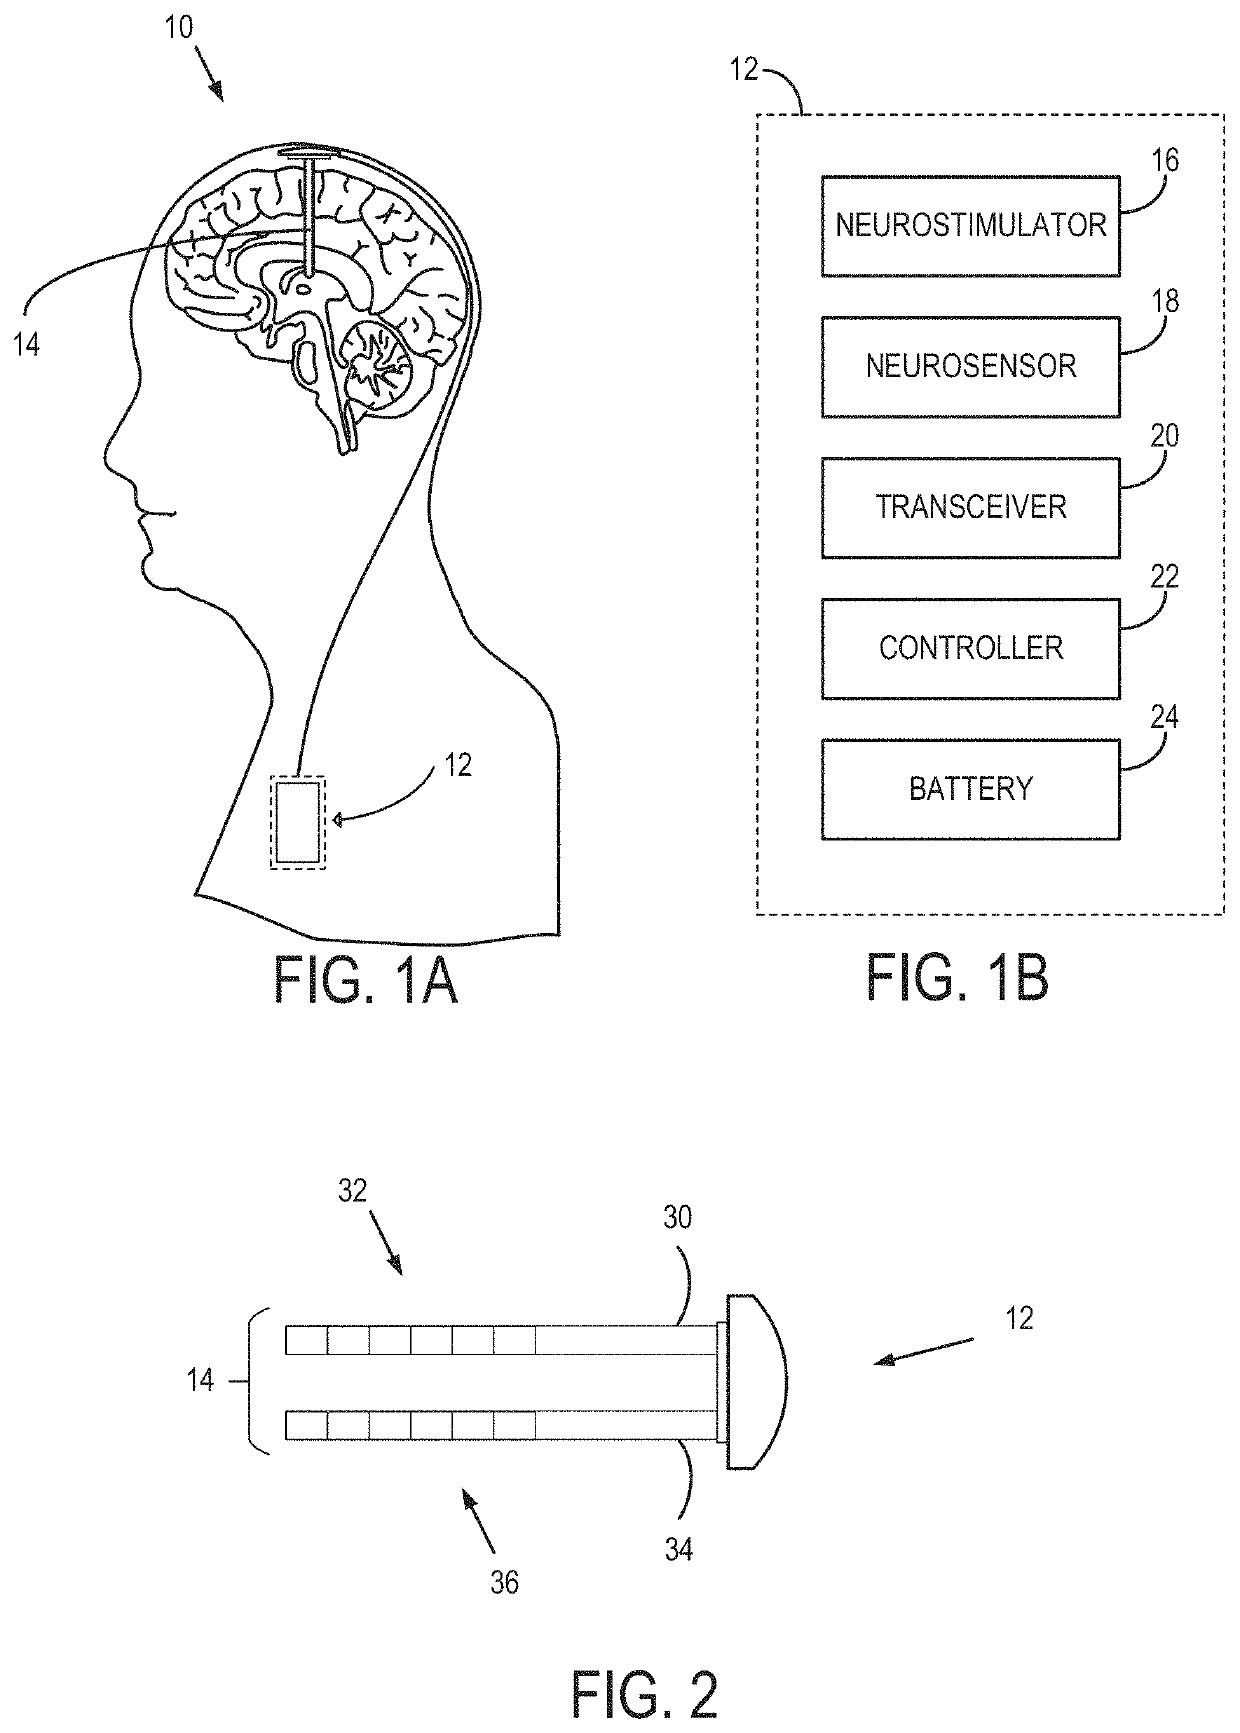 Deep brain stimulation system and method with multi-modal, multi-symptom neuromodulation